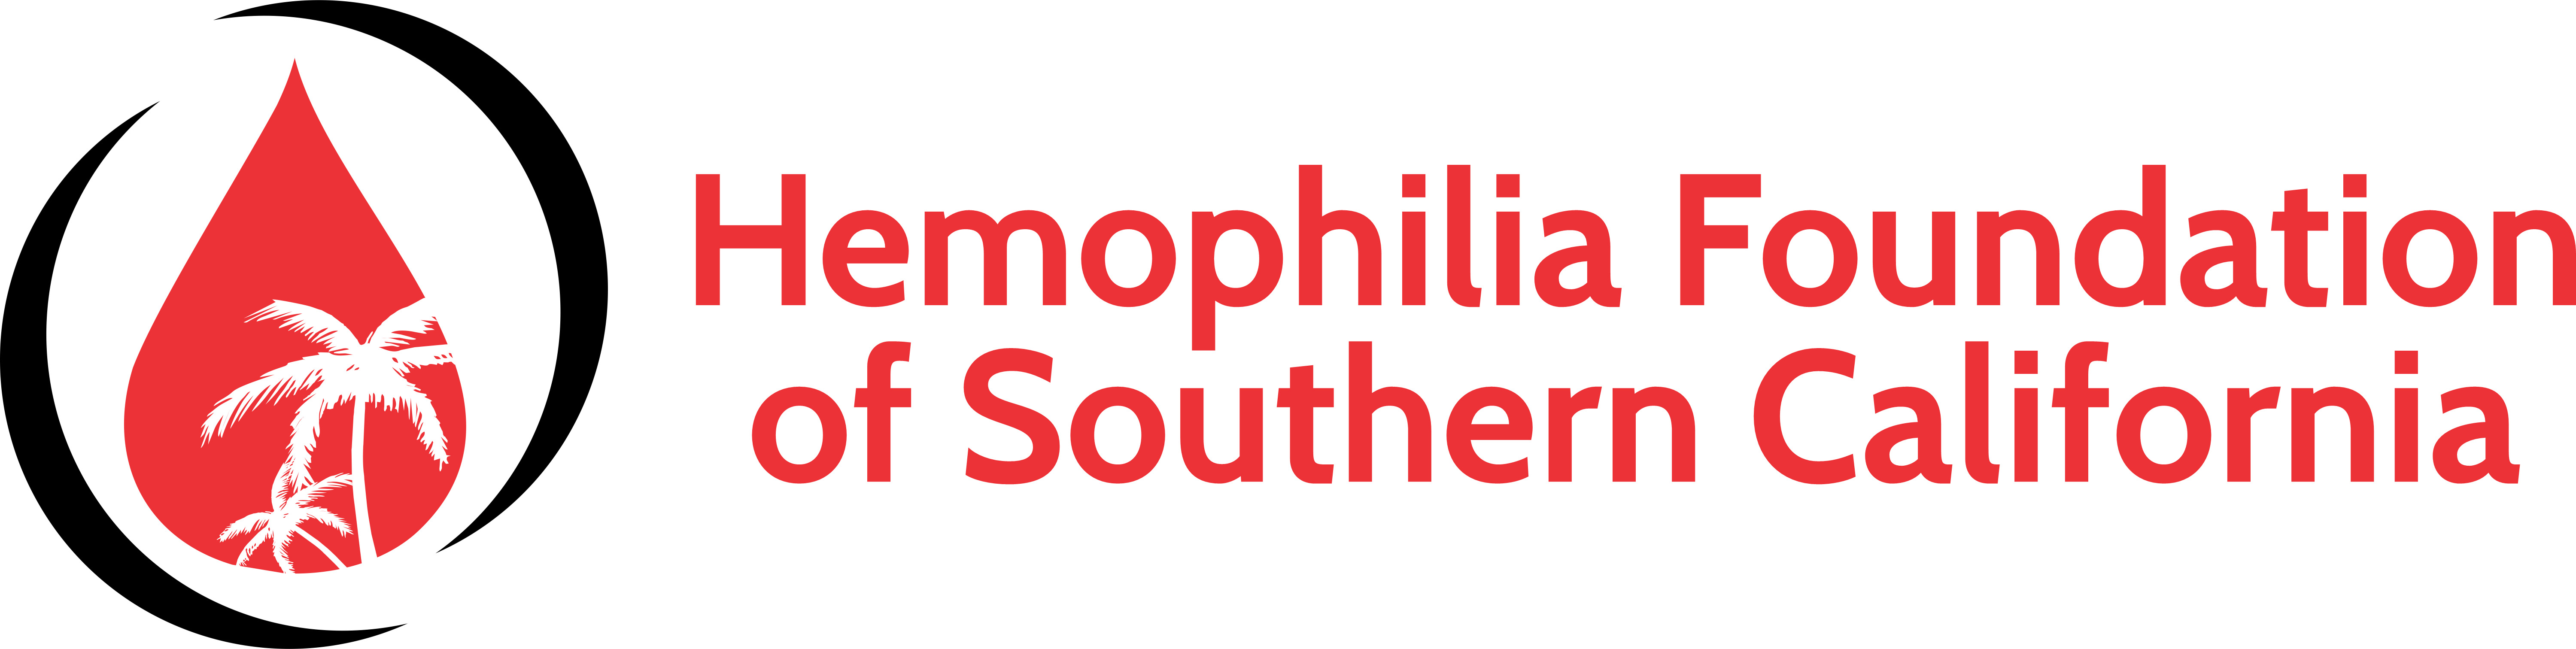 Hemophilia Foundation of Southern California